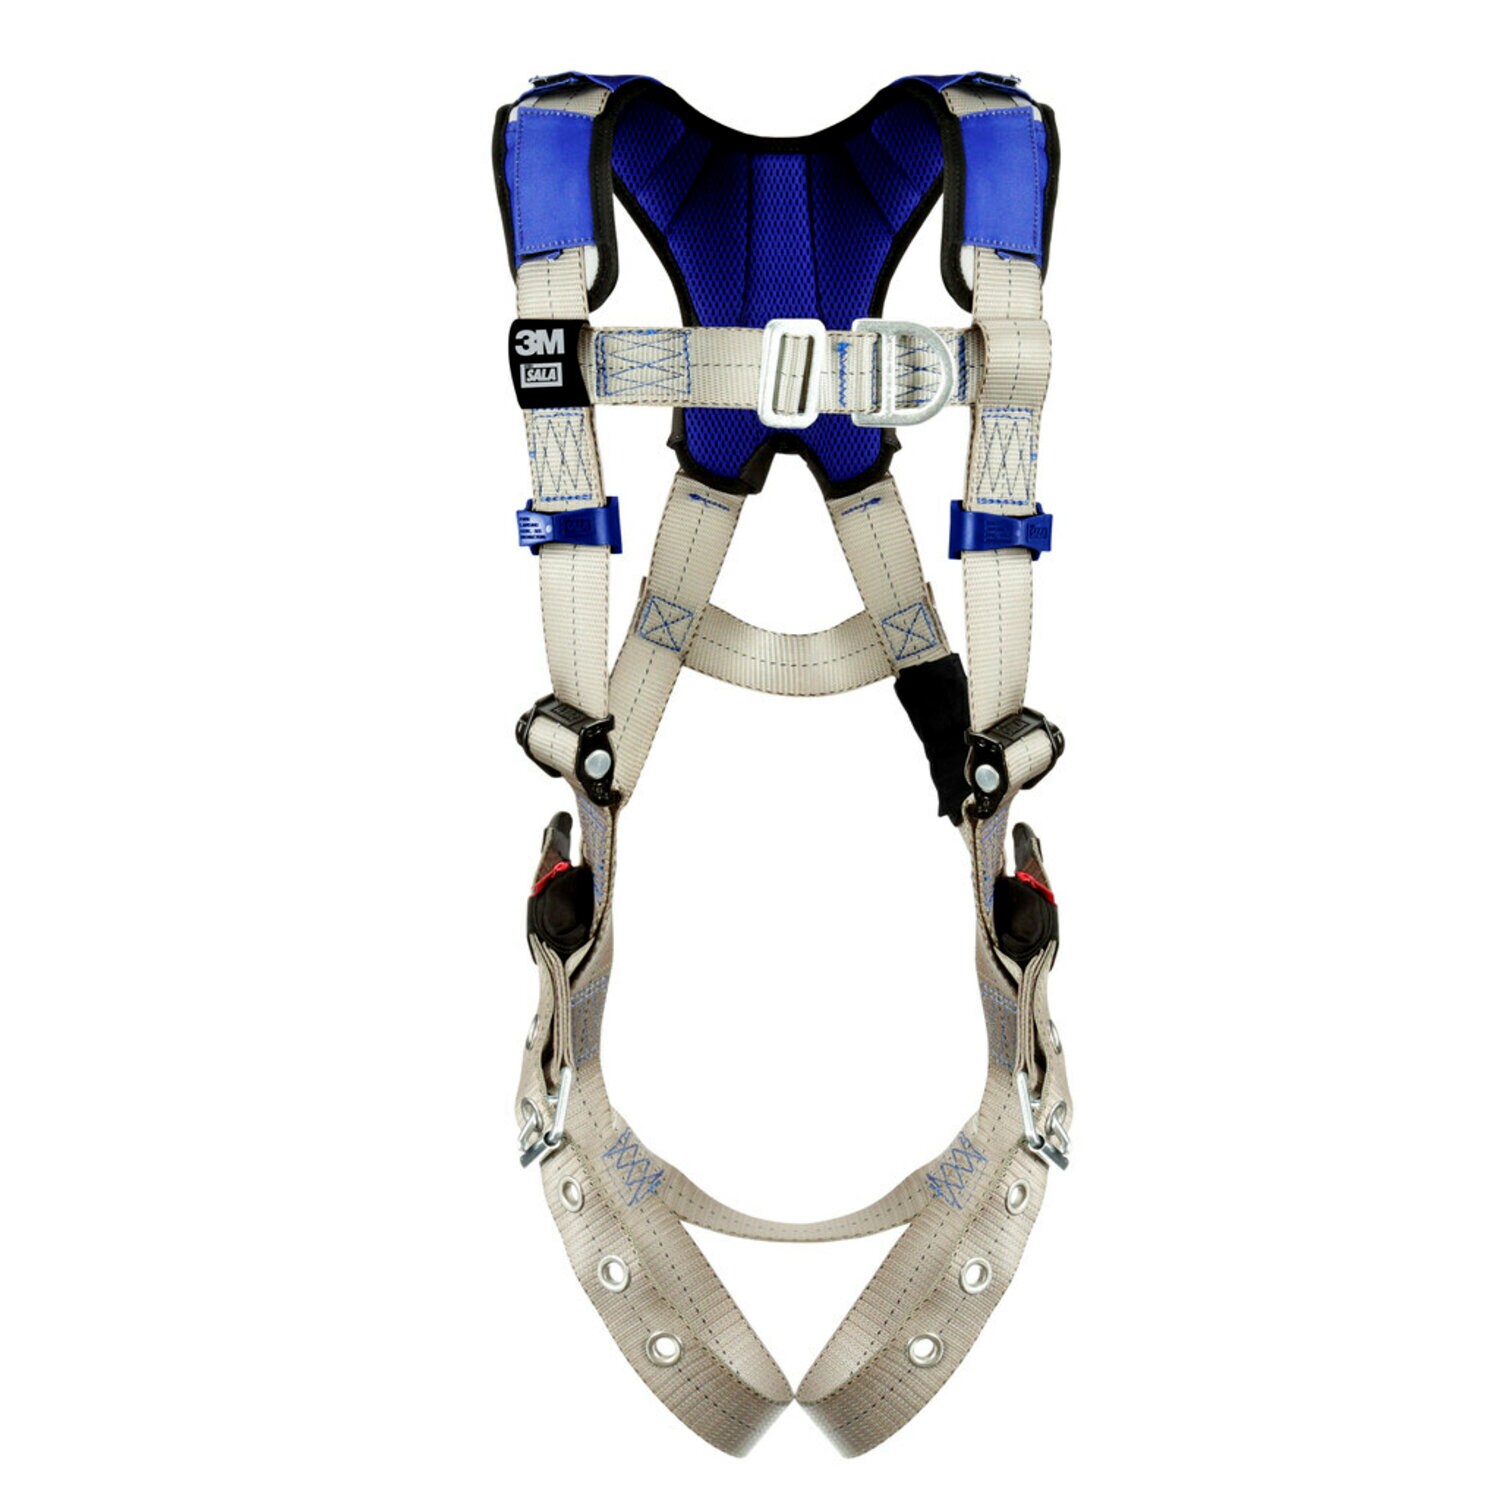 7012817446 - 3M DBI-SALA ExoFit X100 Comfort Vest Climbing Safety Harness 1401007, Large